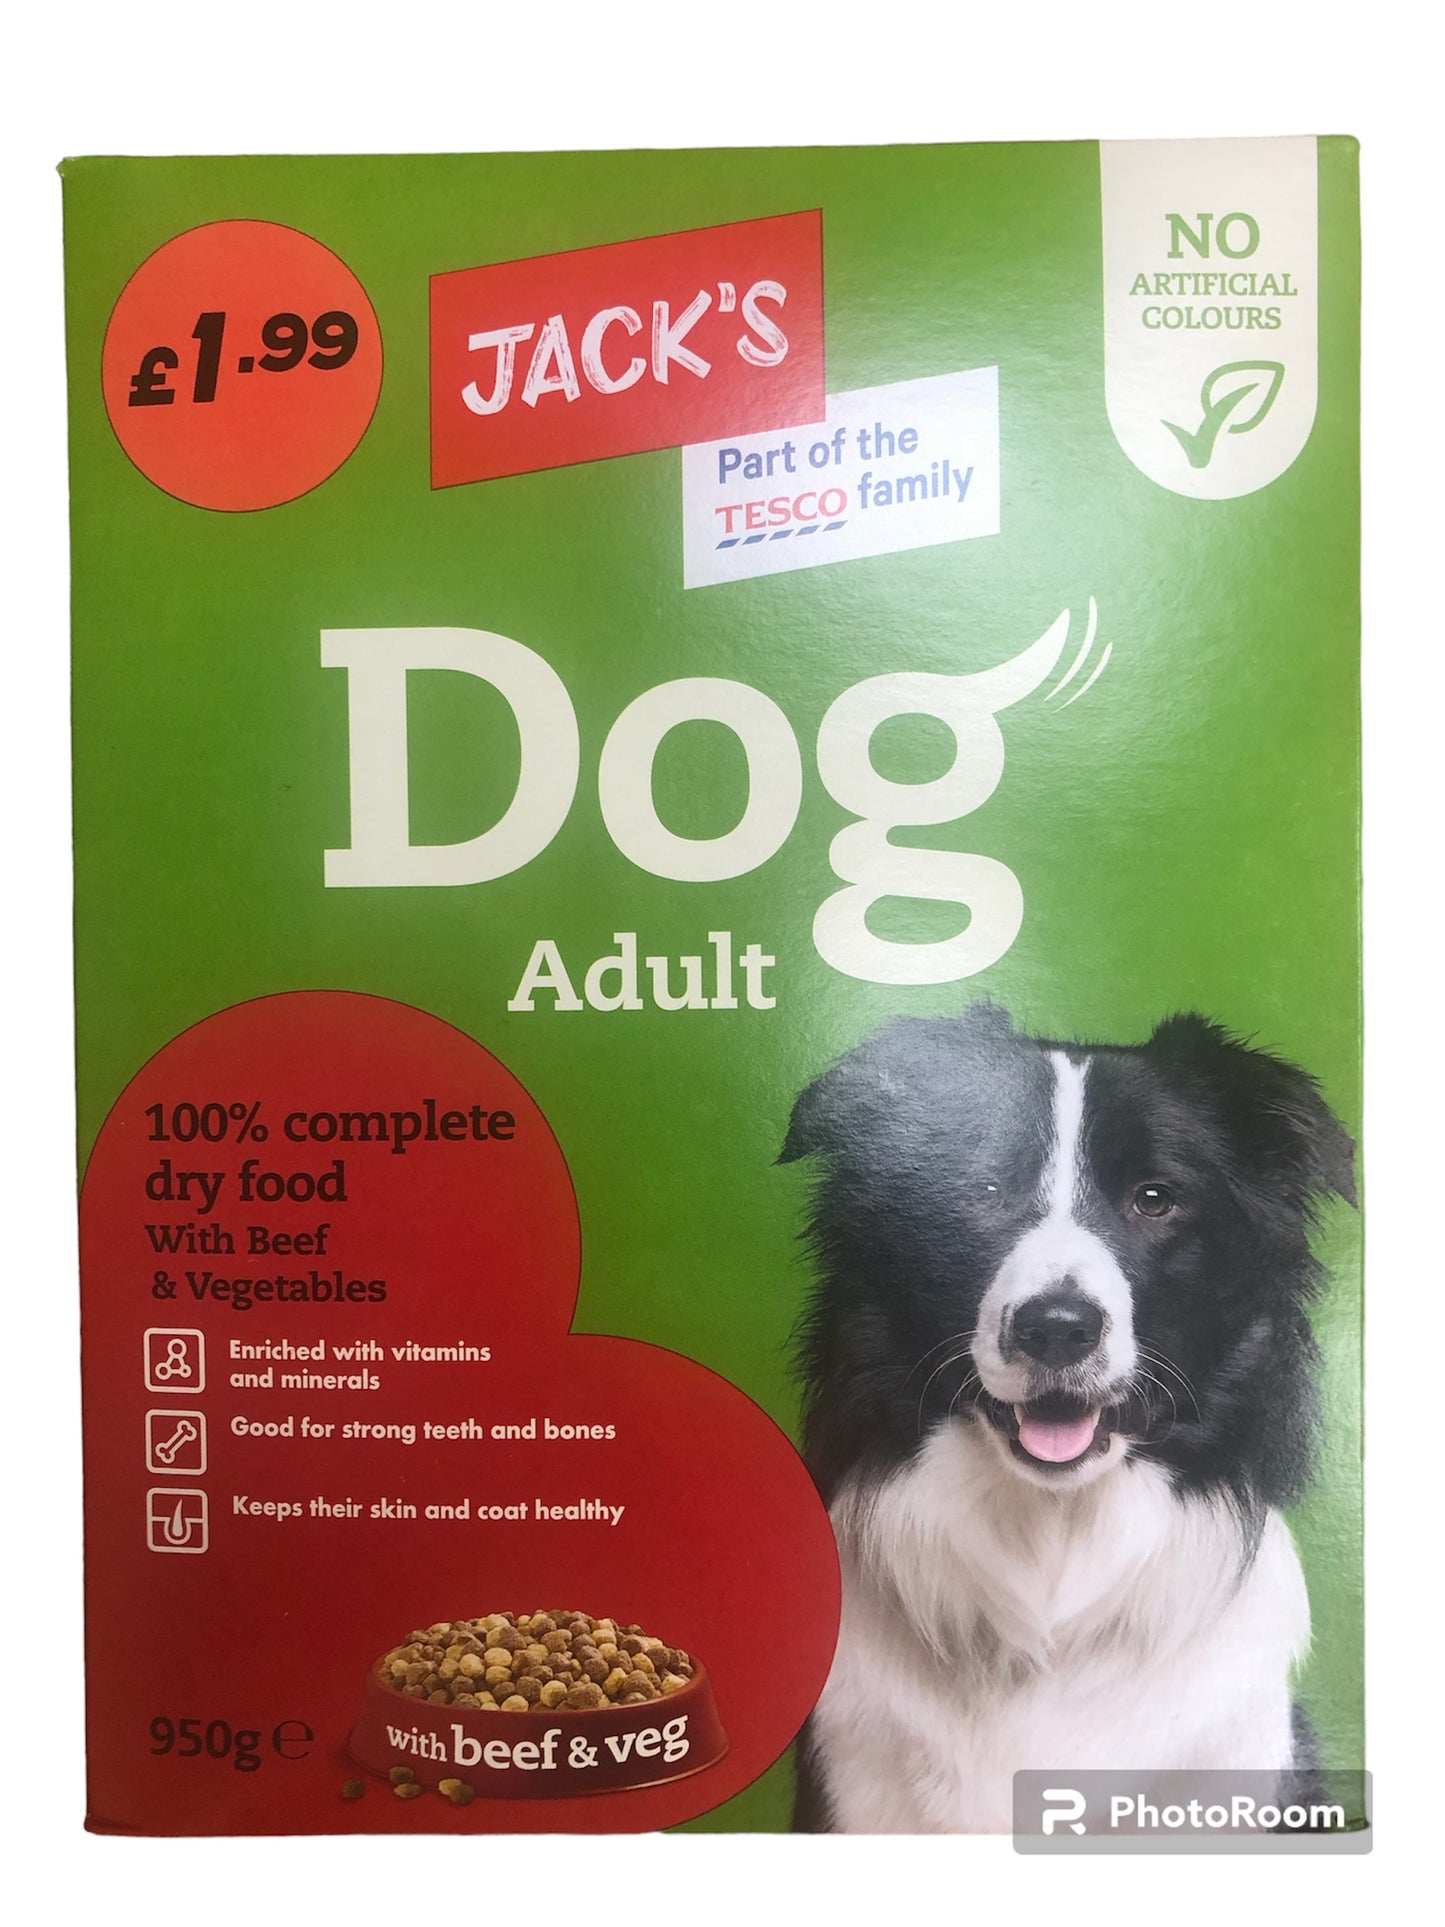 Jacks dog adult